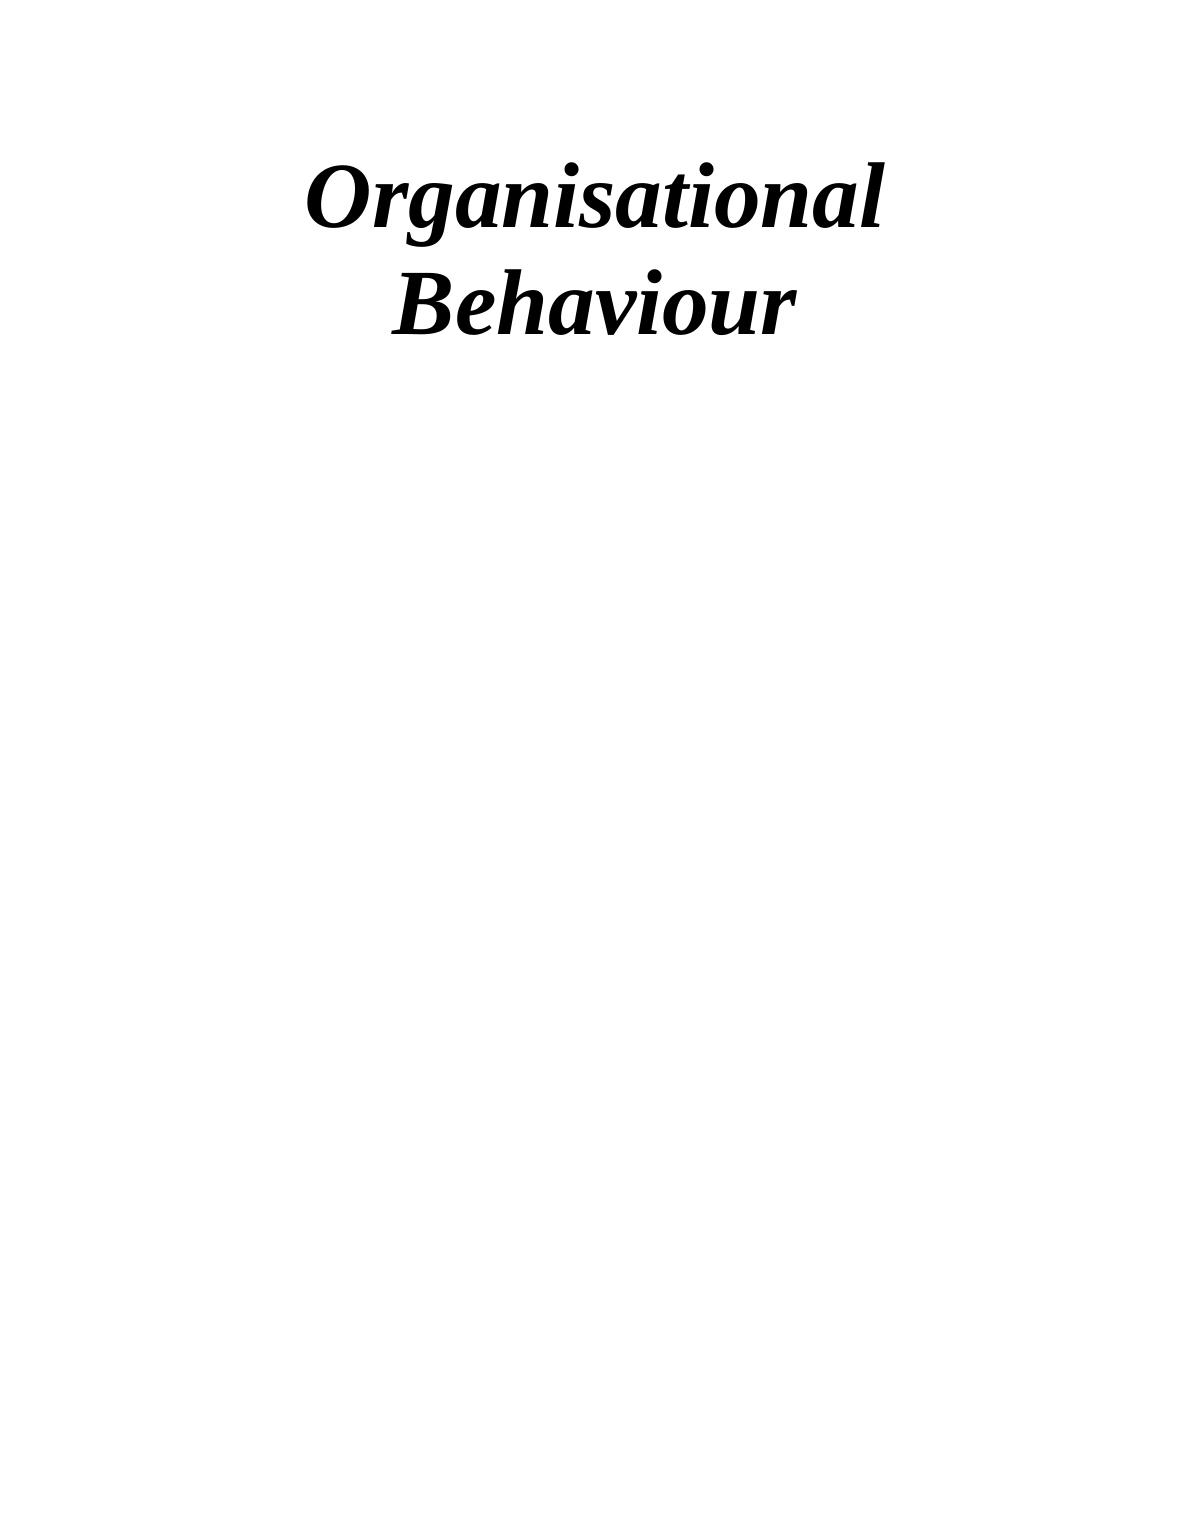 Organisational Behaviour Assignment -P1. Organizational culture, power, politics Organisational culture_1